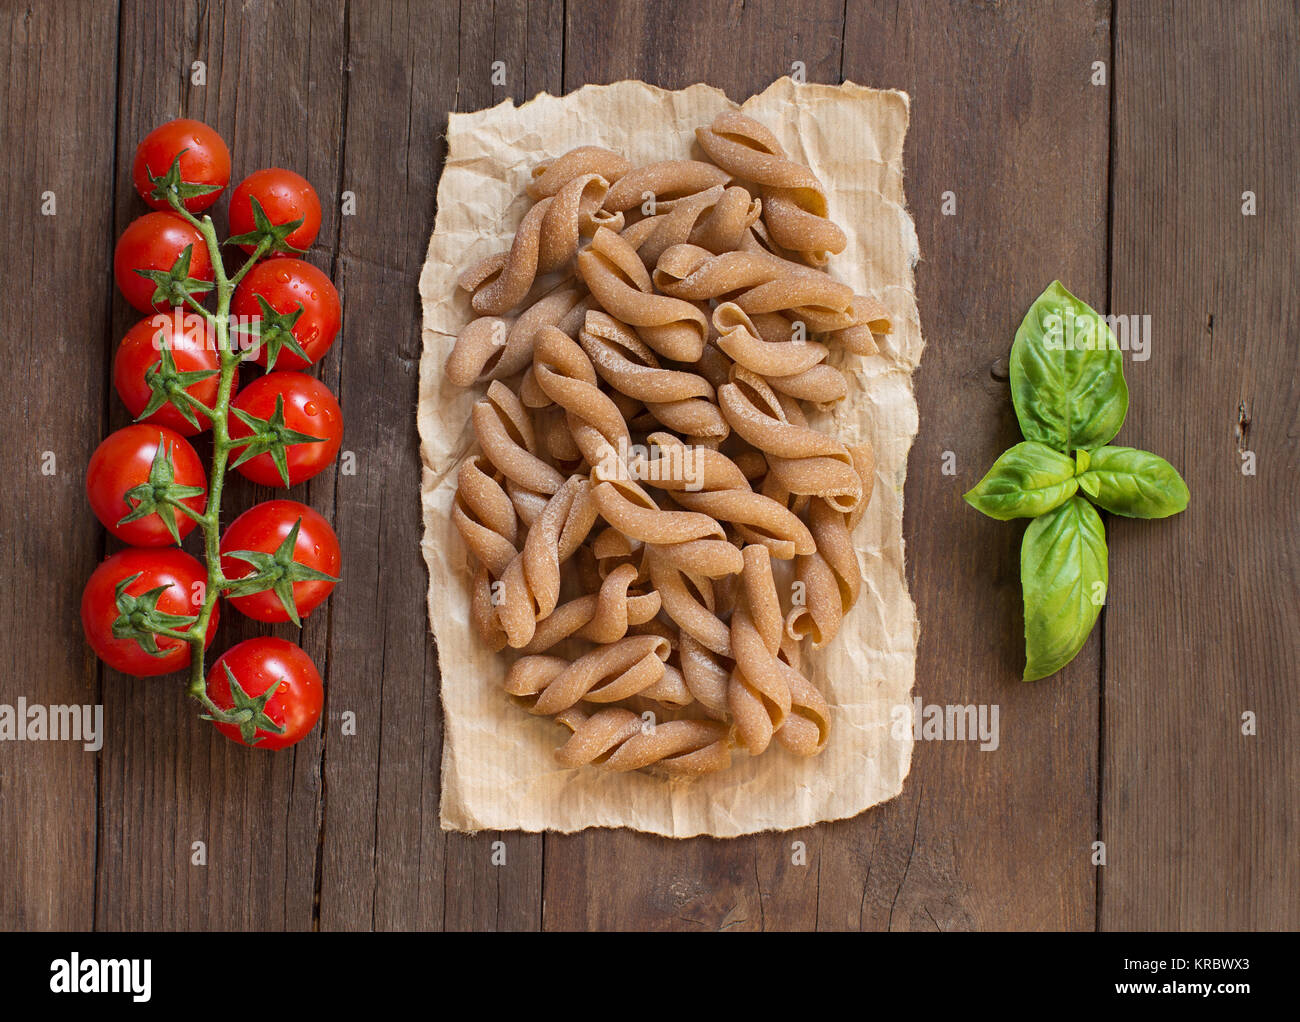 Whole wheat pasta, tomatoes and basil Stock Photo